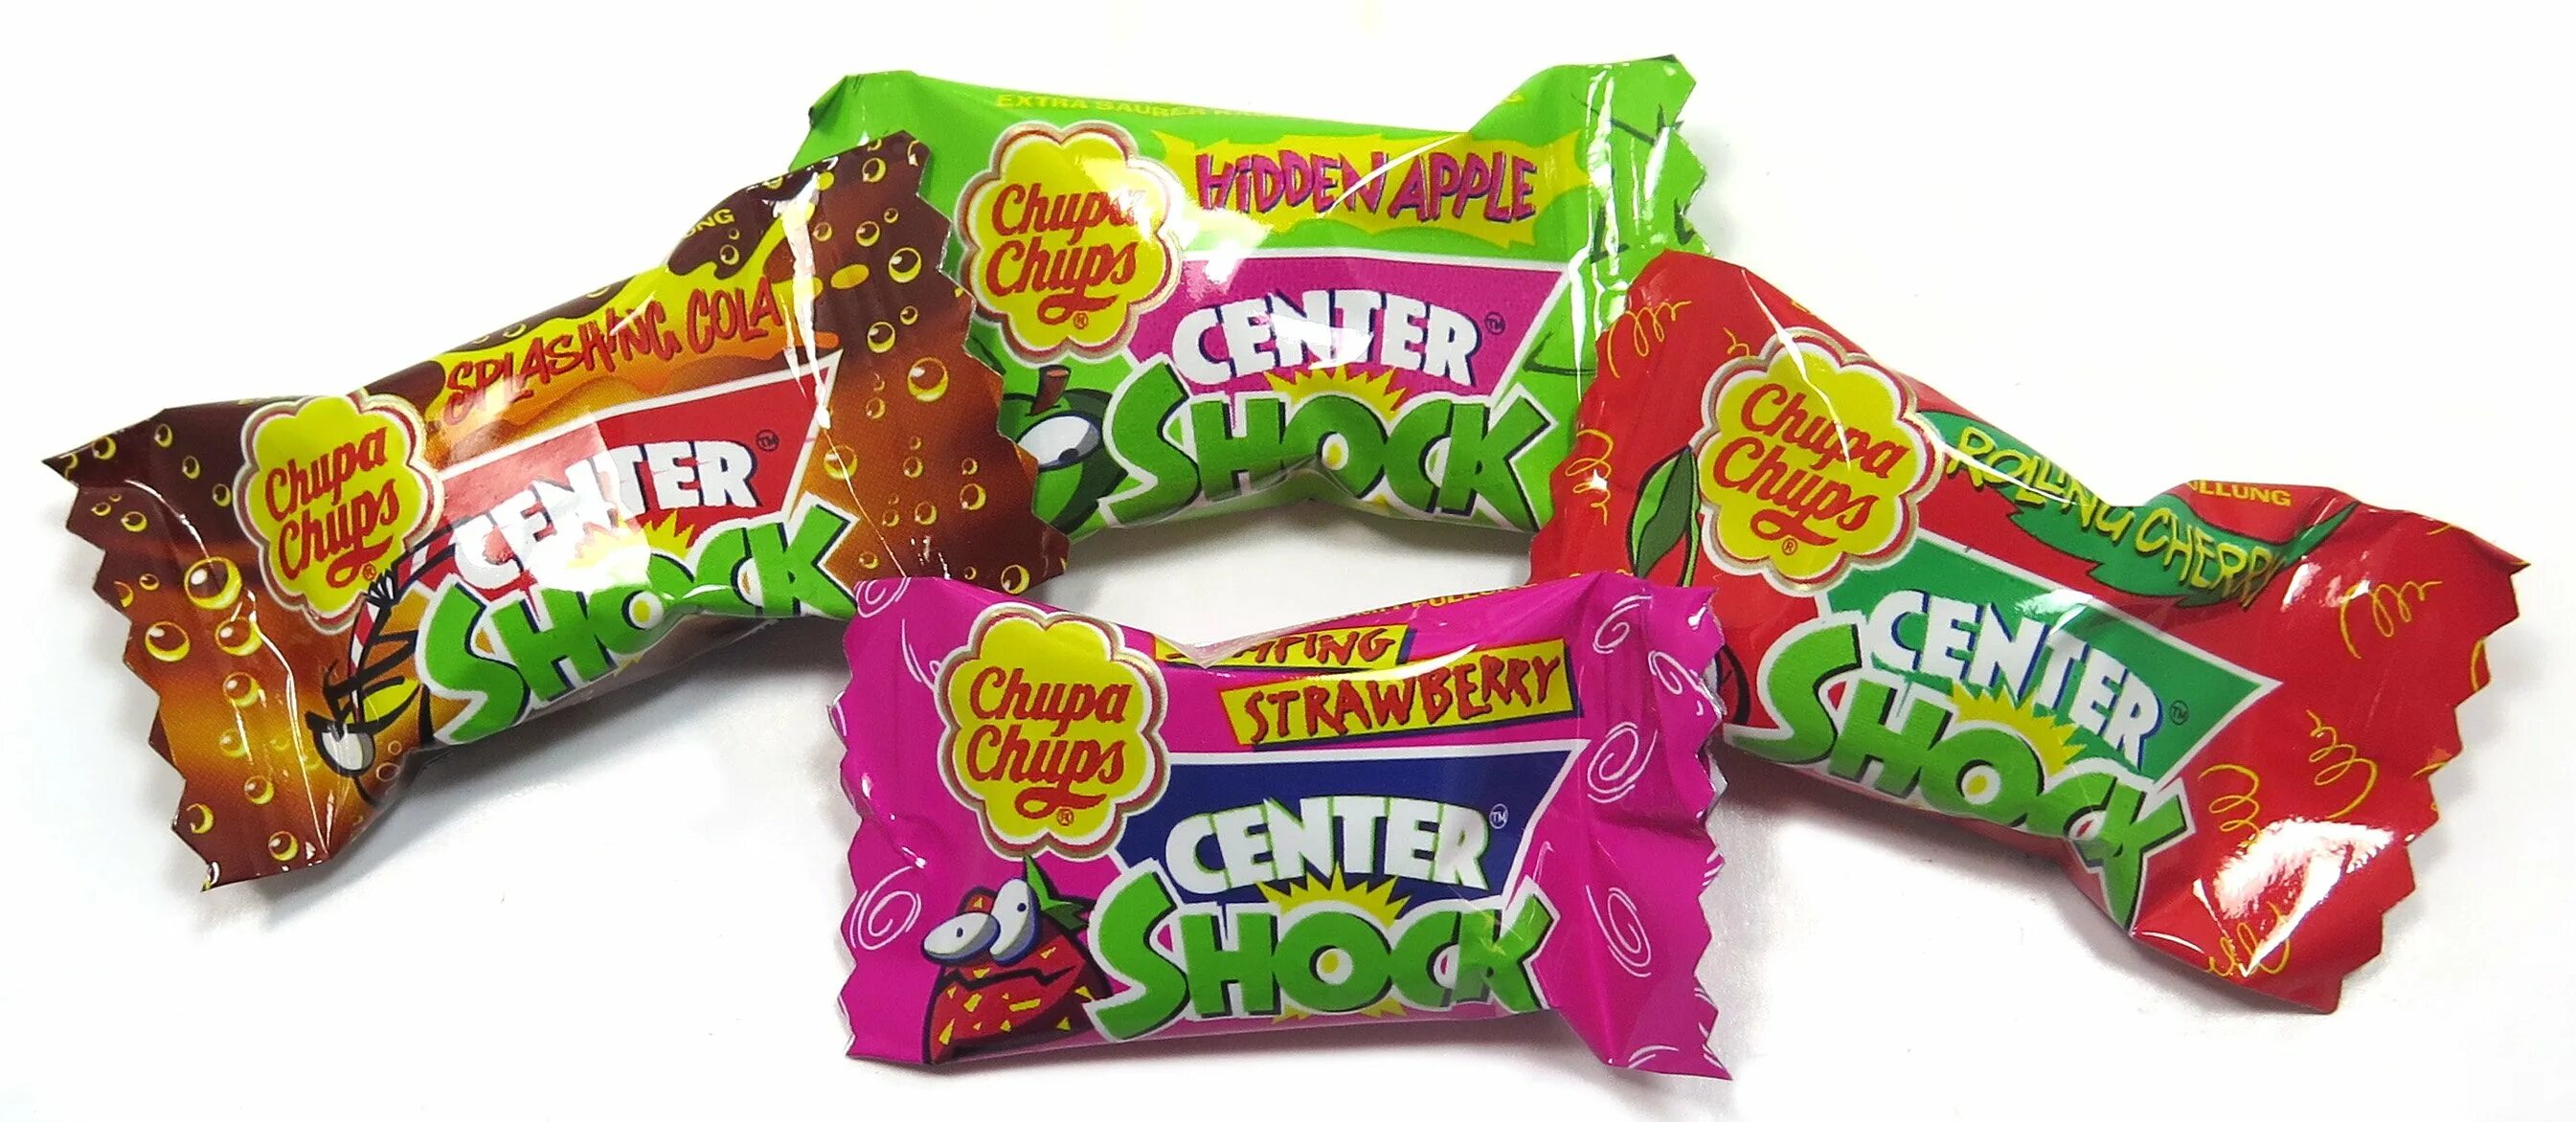 Candy chupa. Center Shock жвачка 90е. Кислые конфеты. Конфеты ШОК. Жевательная конфета Shock.